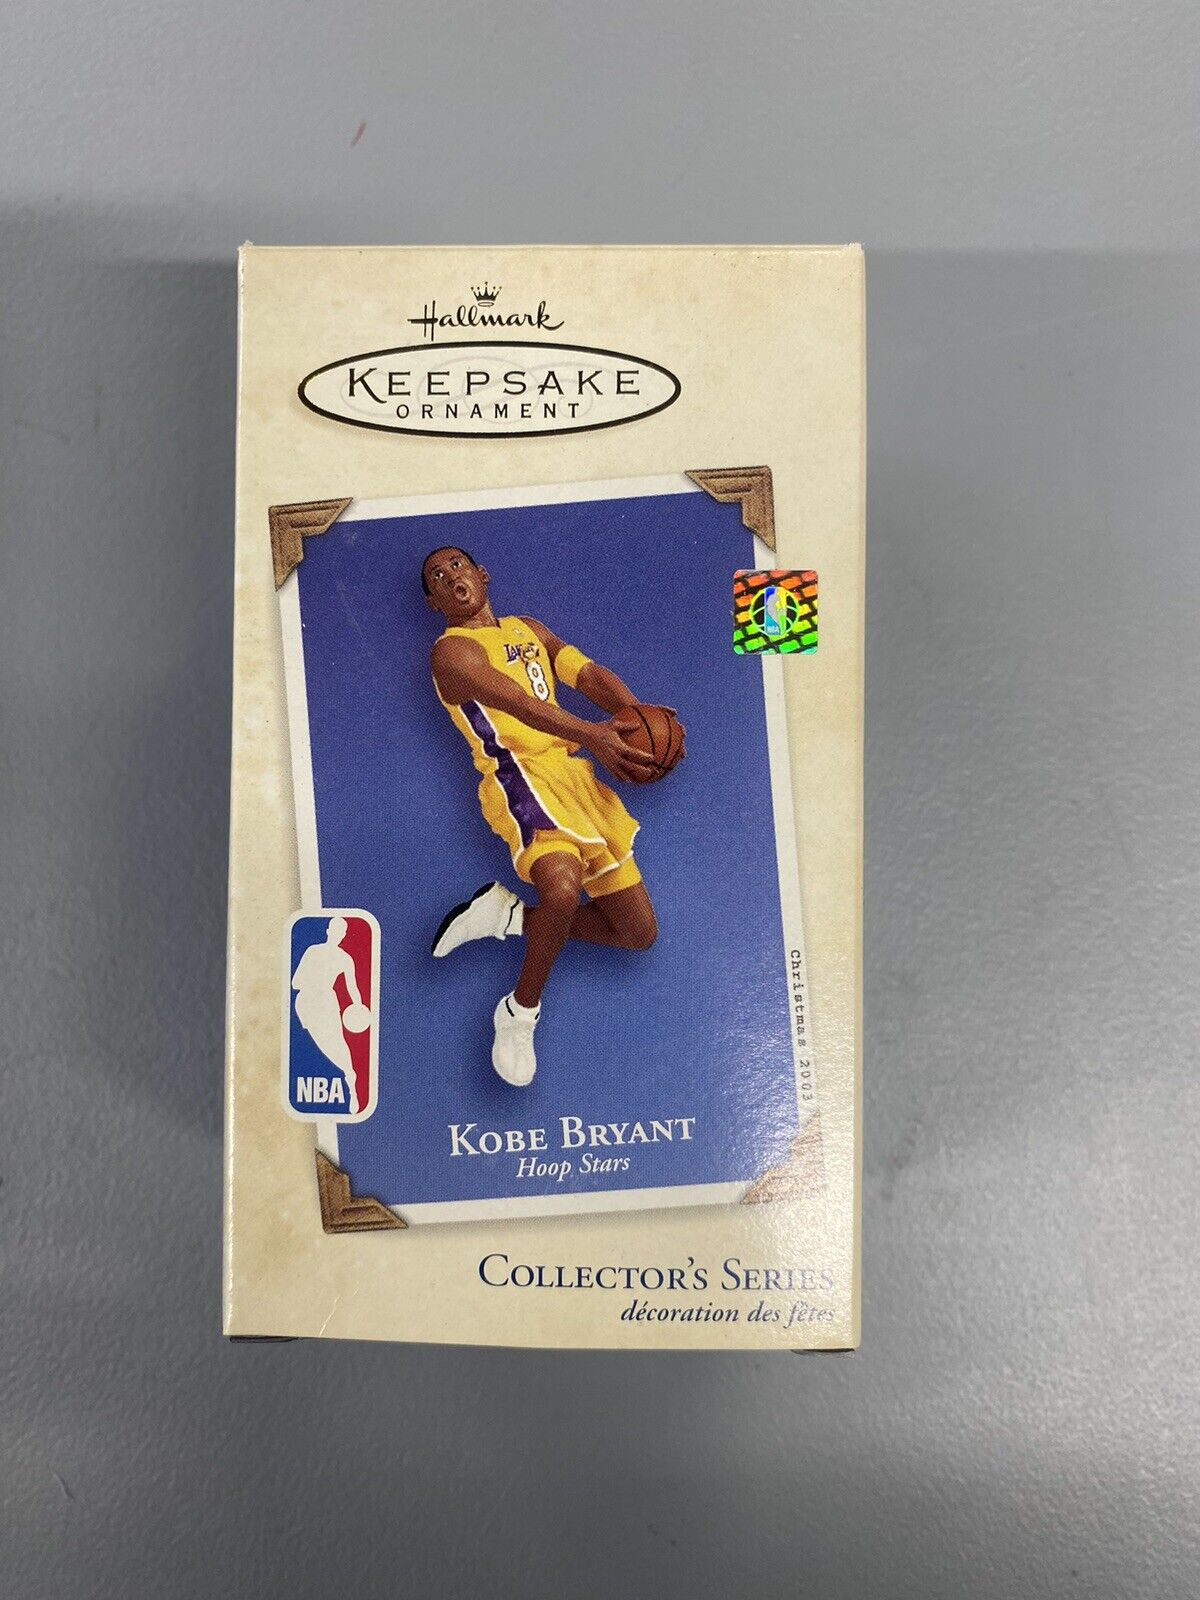 Hallmark Ornament Kobe Bryant 9th in Hoop Stars Series NBA Lakers 2003